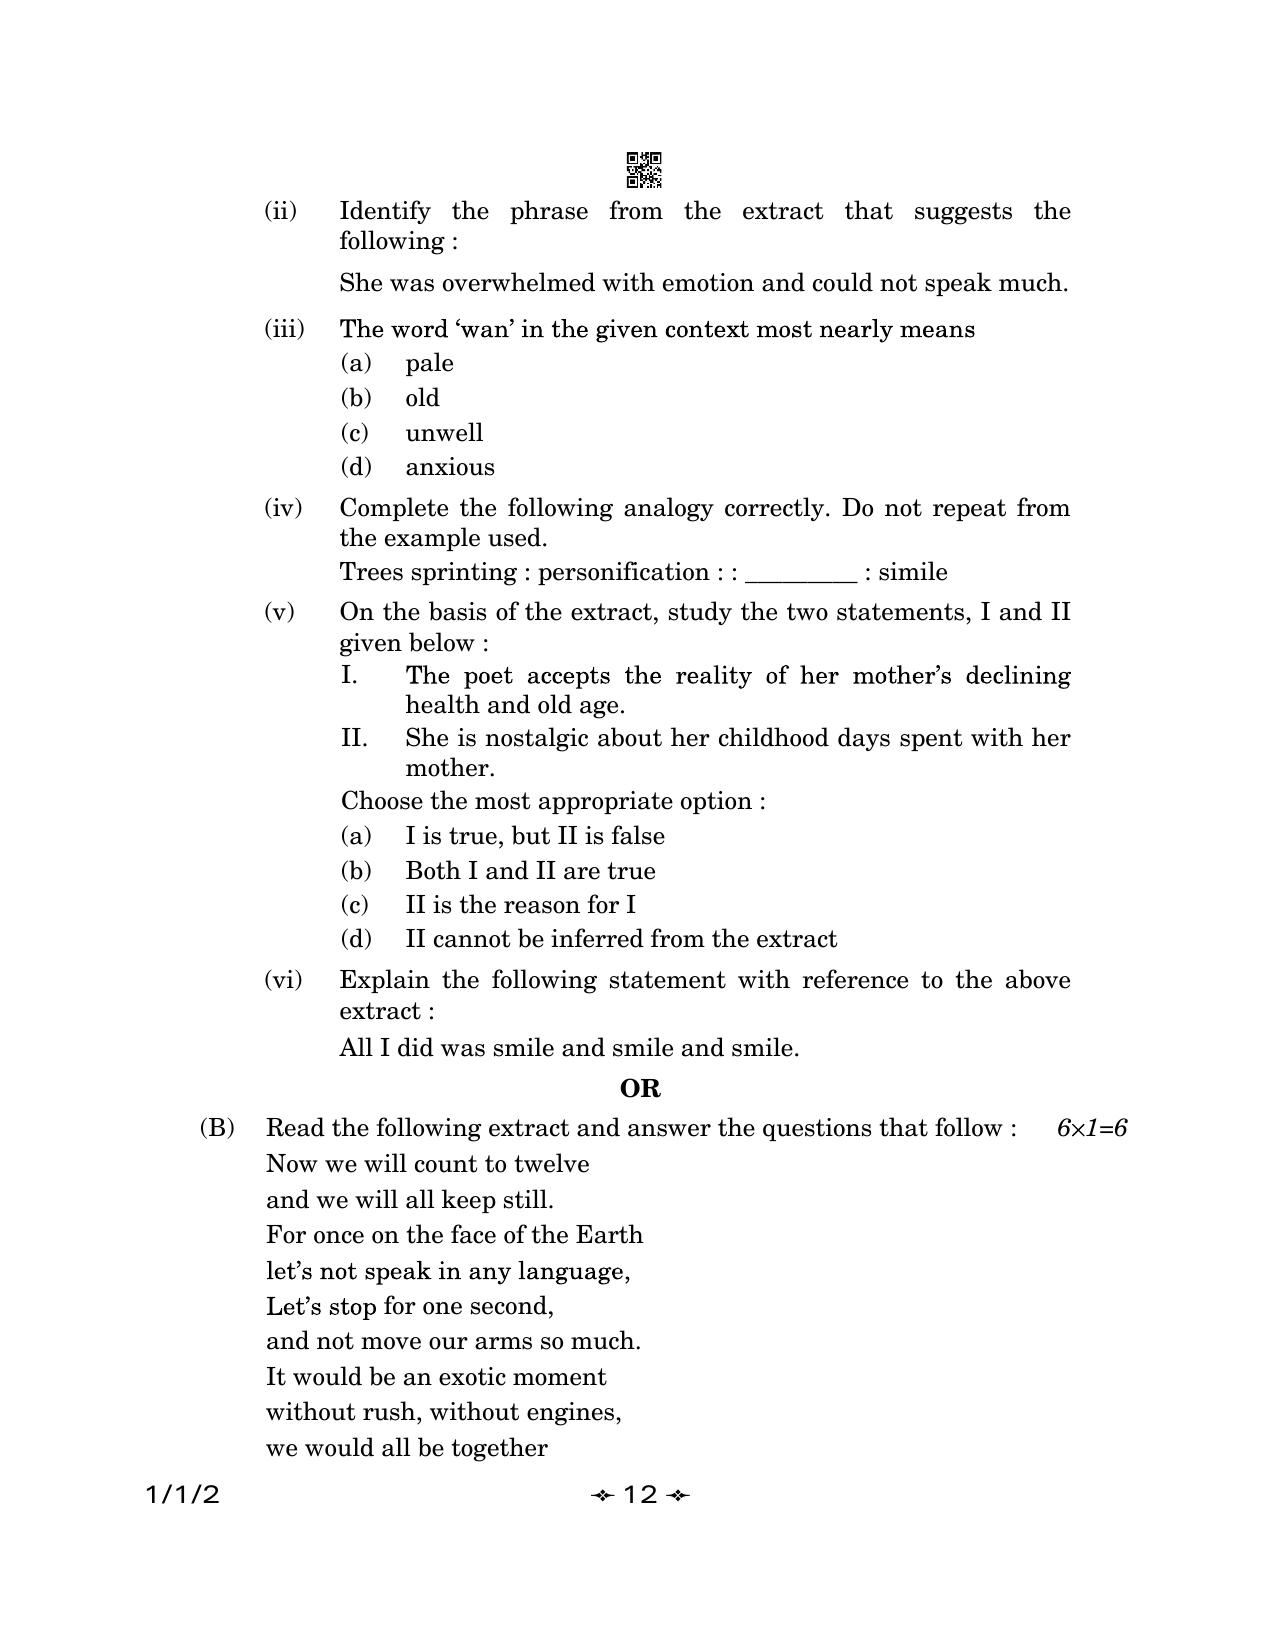 CBSE Class 12 1-1-2 English Core 2023 Question Paper - Page 12